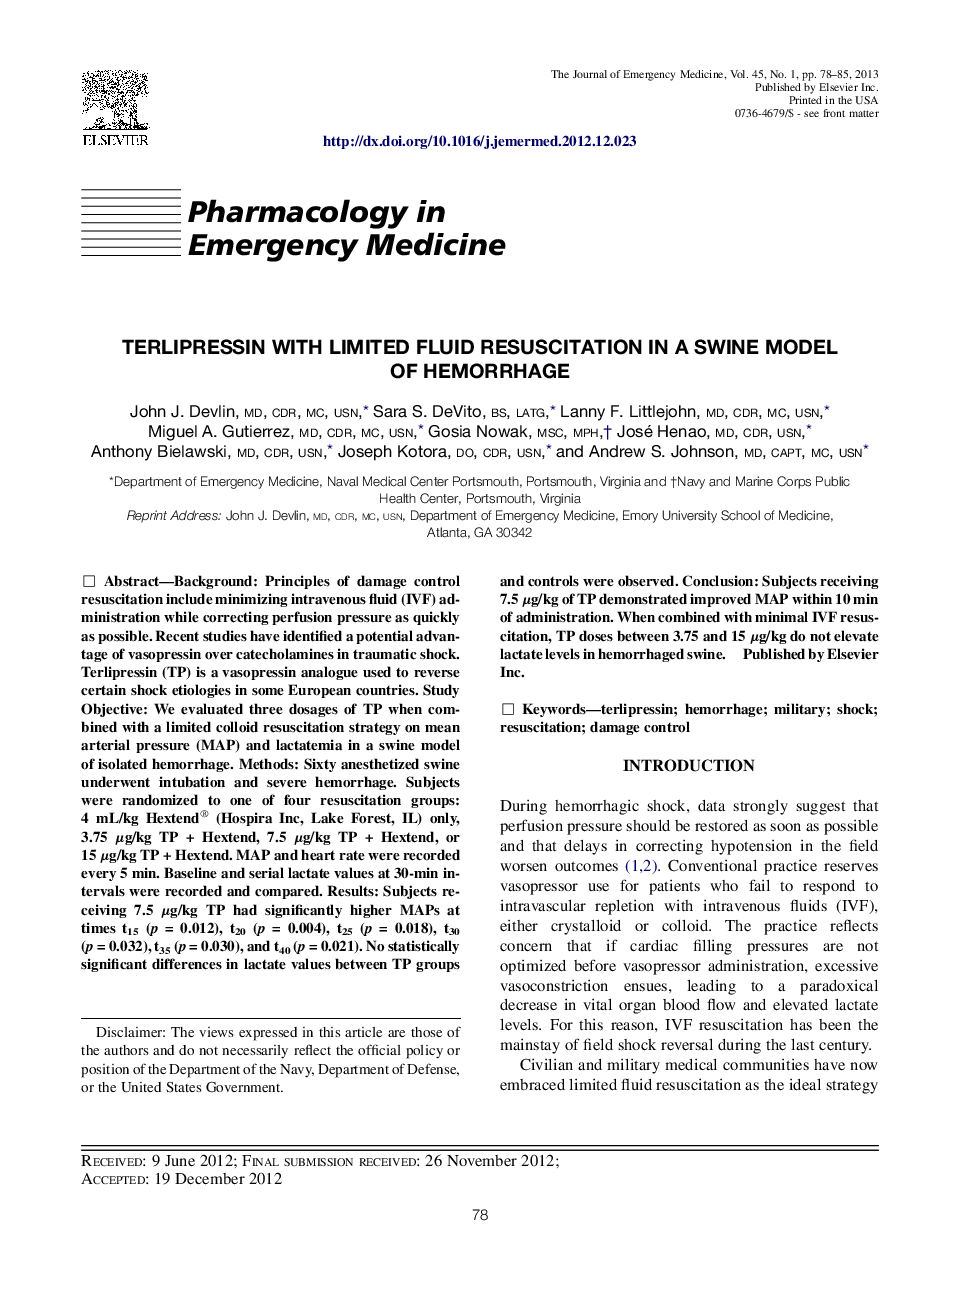 Terlipressin with Limited Fluid Resuscitation in a Swine Model of Hemorrhage 